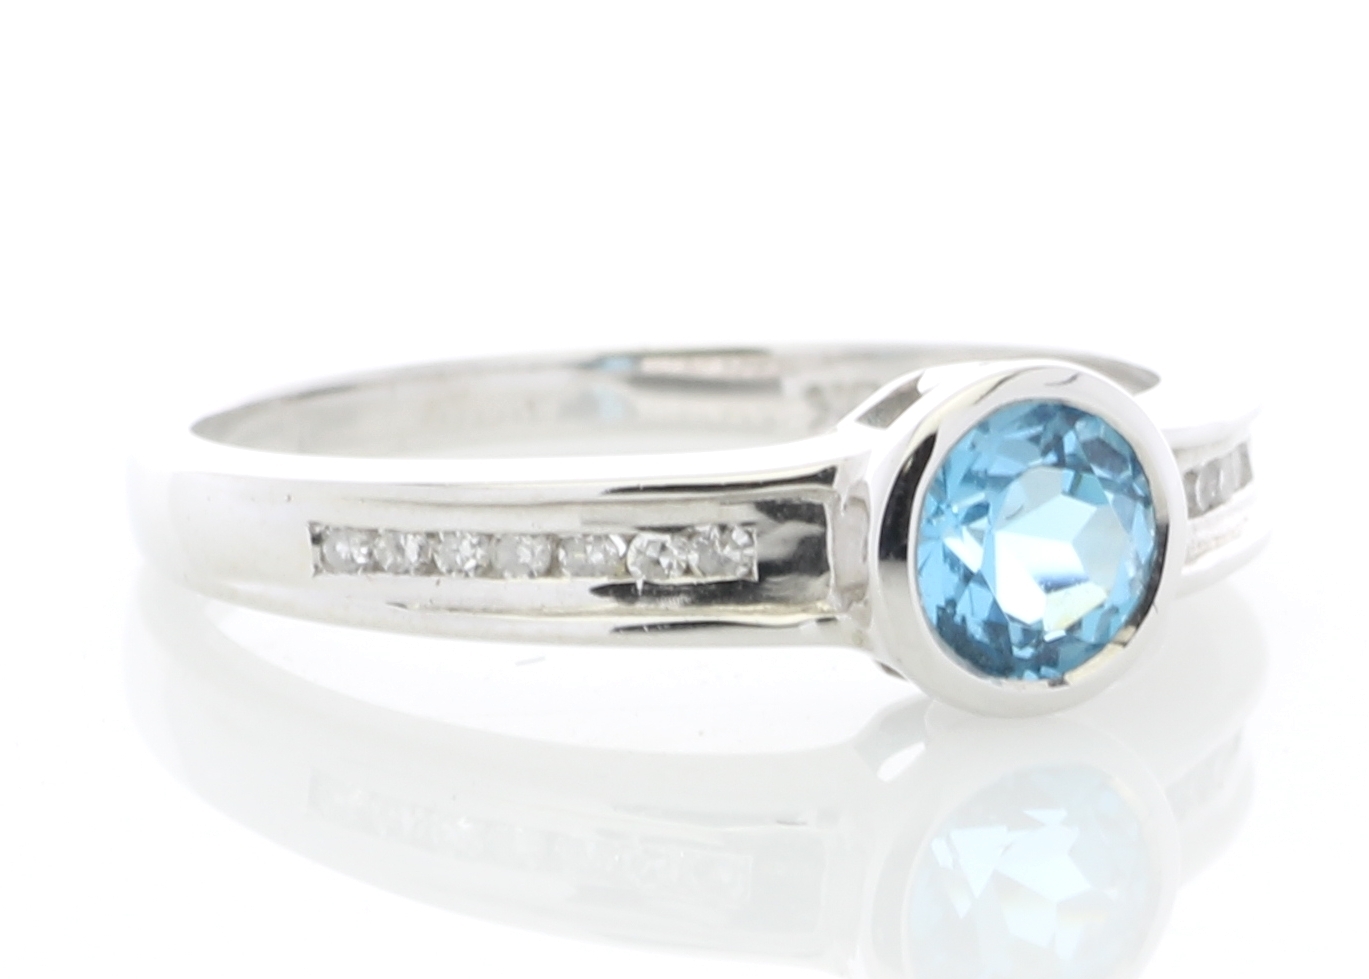 9ct White Gold Diamond & Blue Topaz Ring - Image 4 of 5